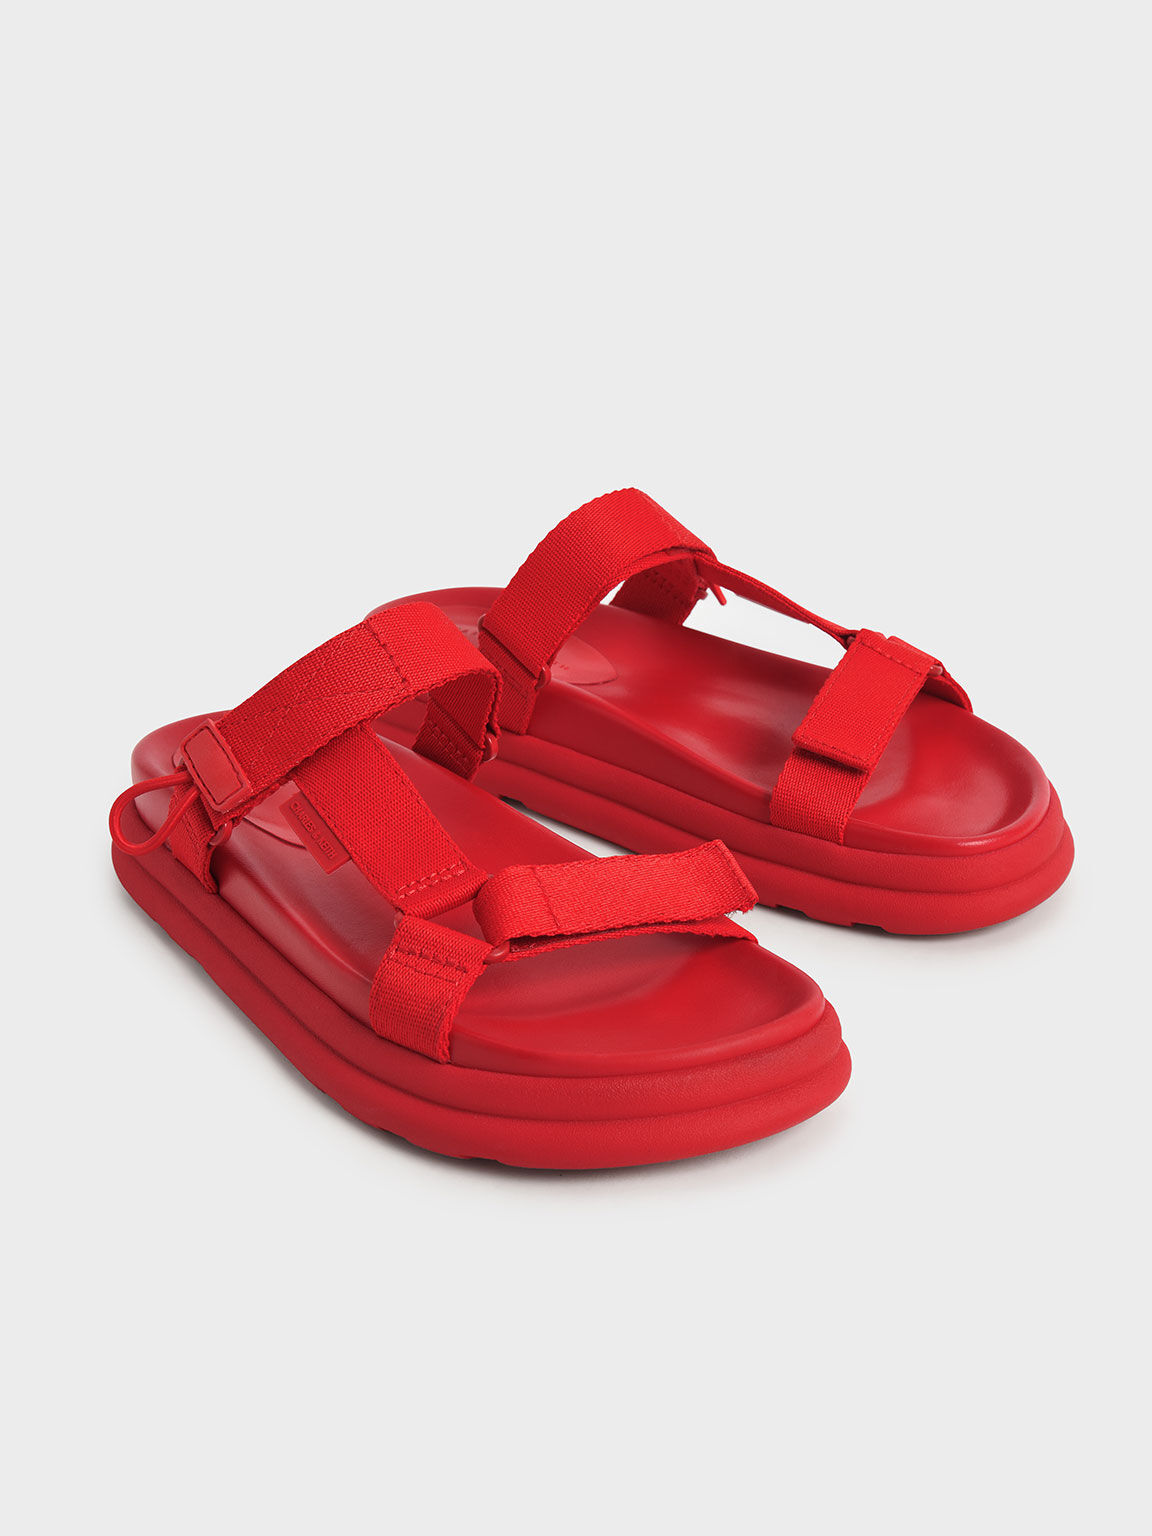 Sandal Sport Polyester Velcro Strap, Red, hi-res